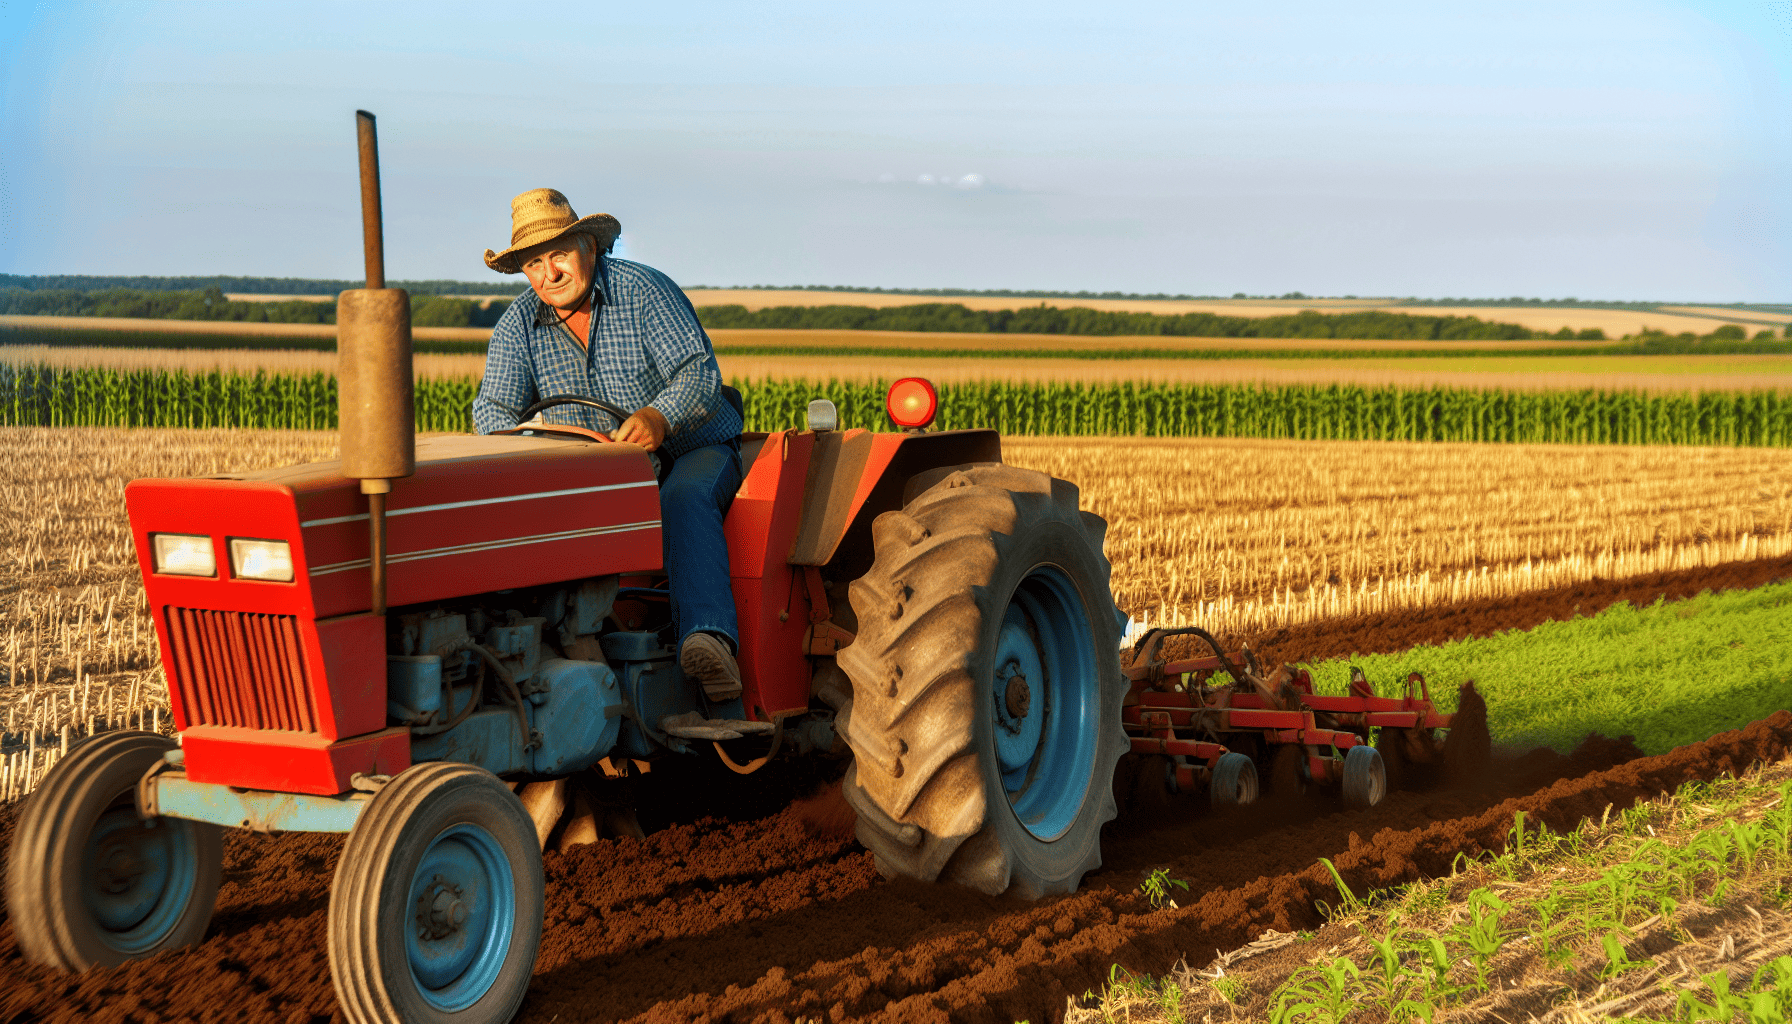 A utility tractor in a farm field